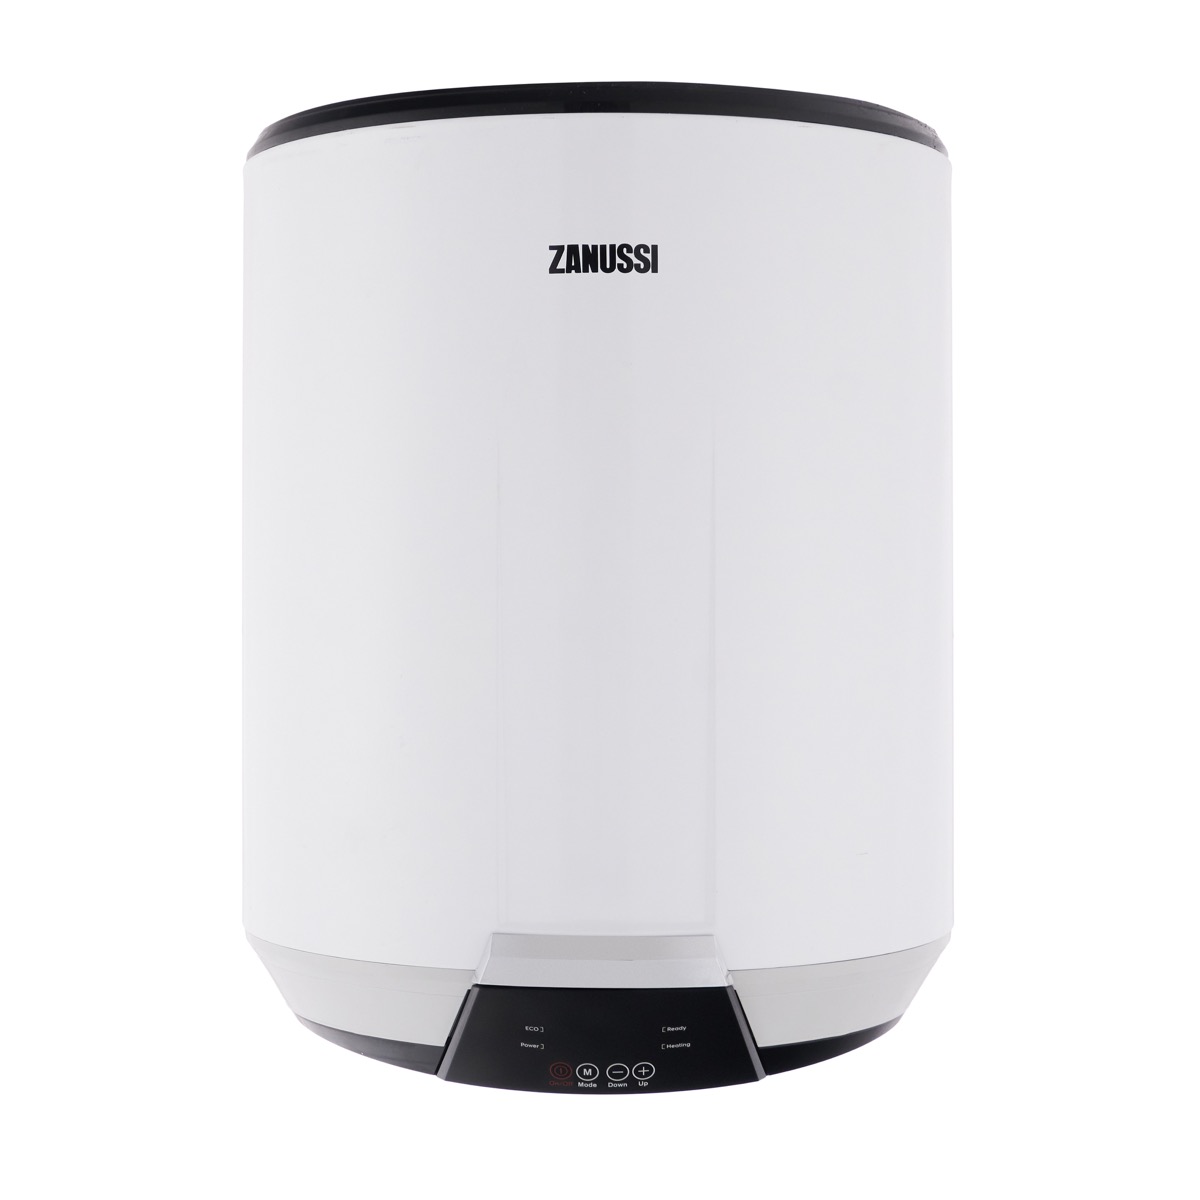 Zanussi Electric Digital Water Heater, 50 Liters, White - ZYE05031WS